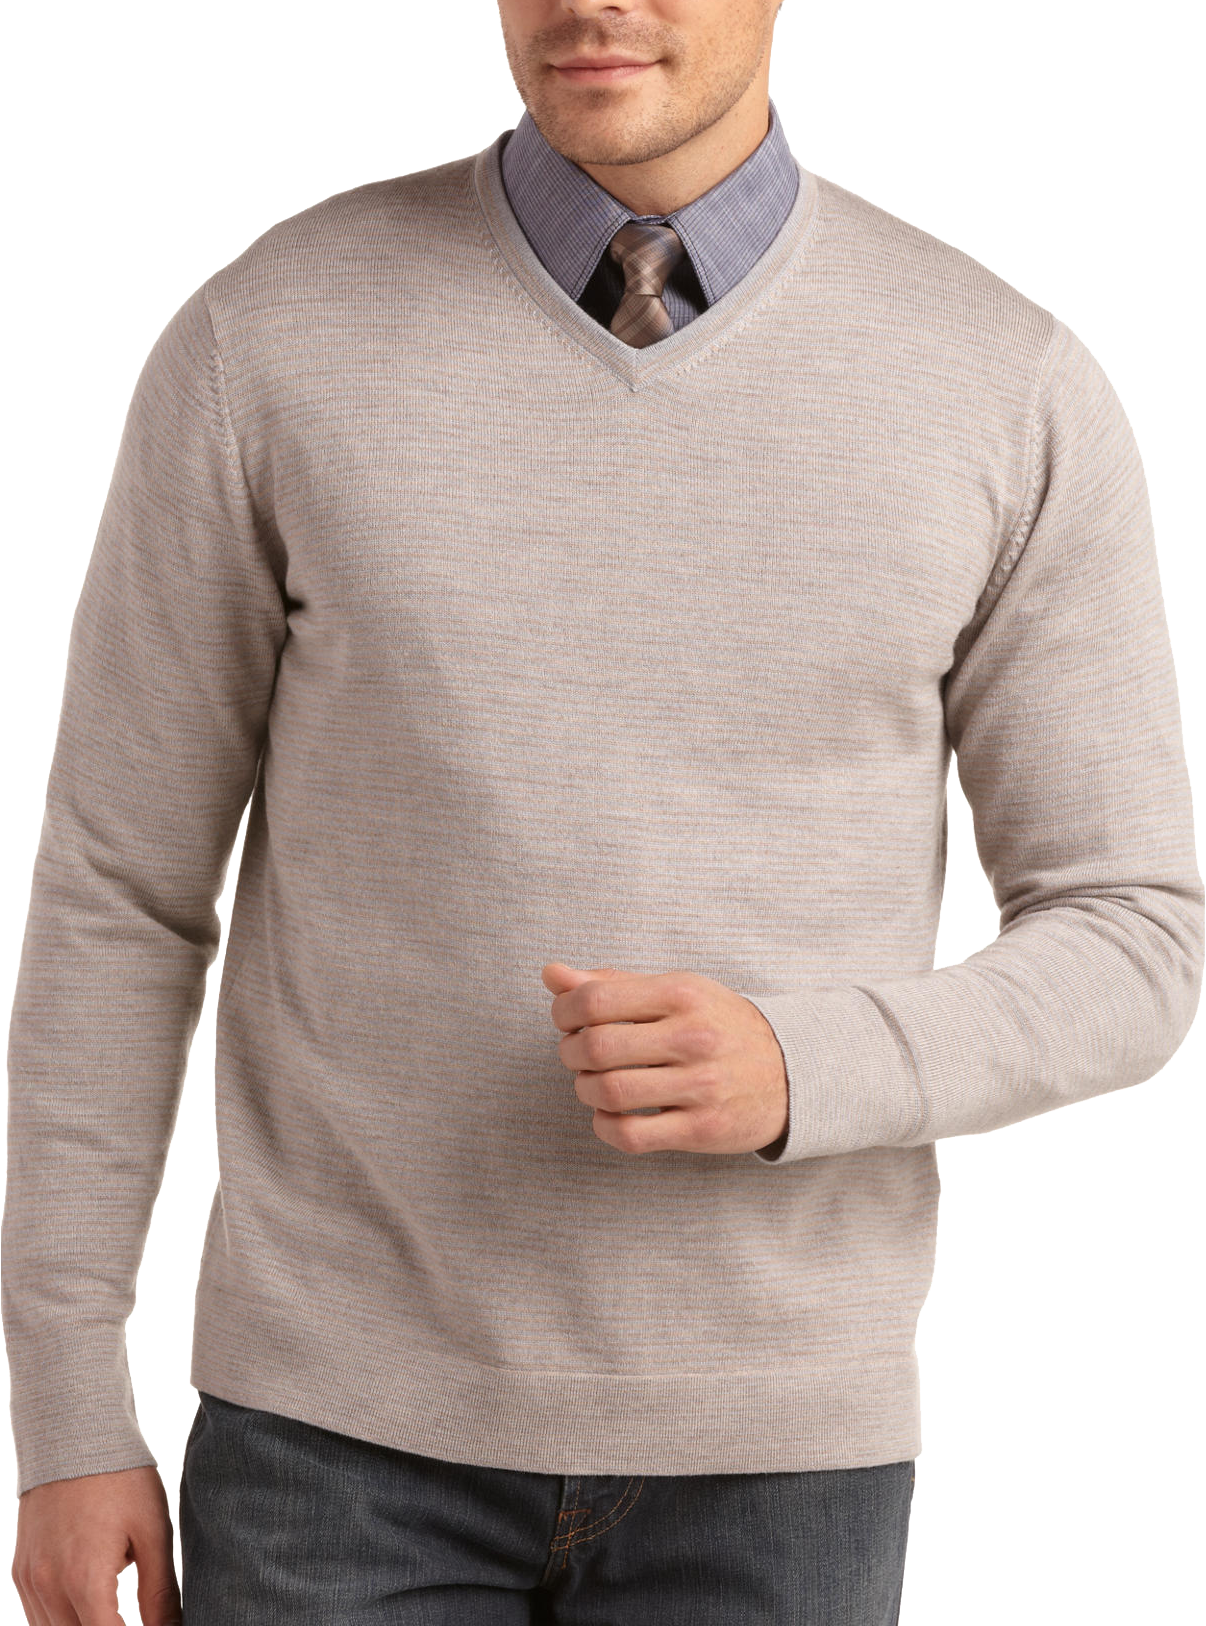 Pronto Uomo Tan and Gray Stripe V-Neck Sweater - Men's Sale | Men's ...